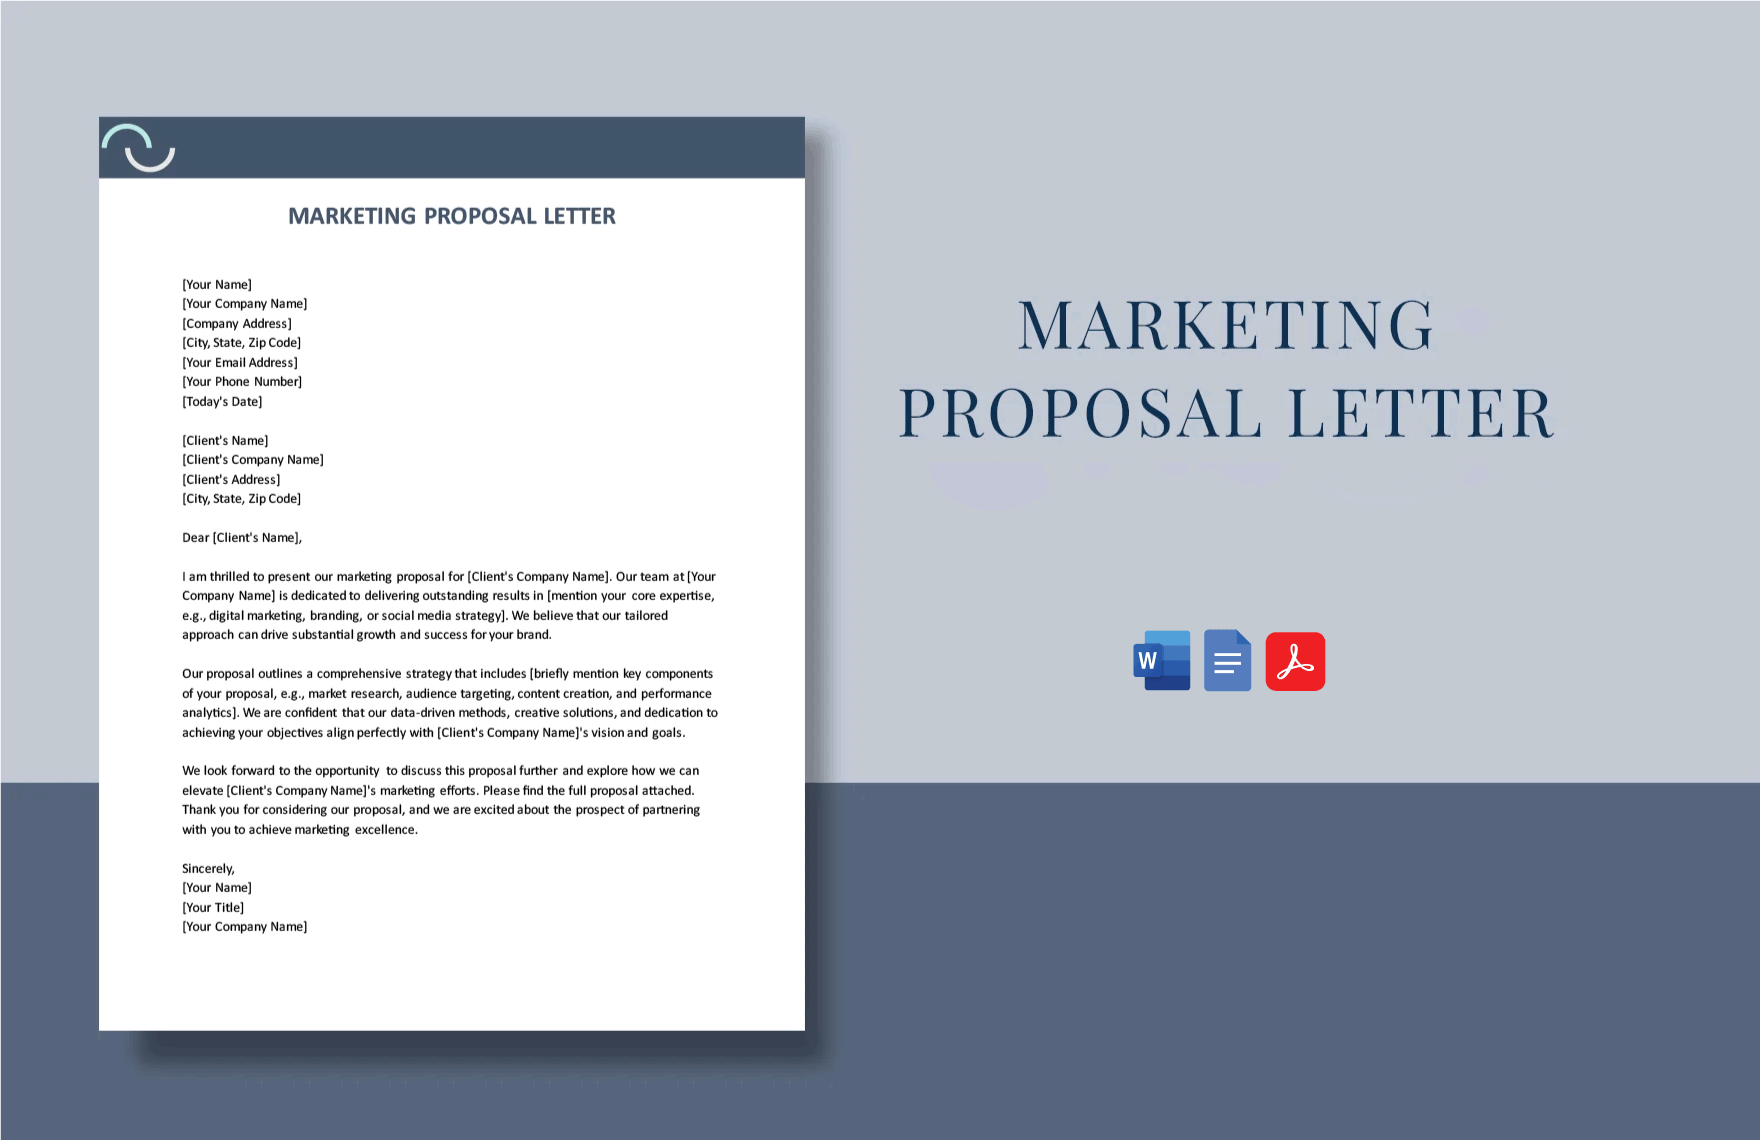 Marketing Proposal Letter in Word, Google Docs, PDF